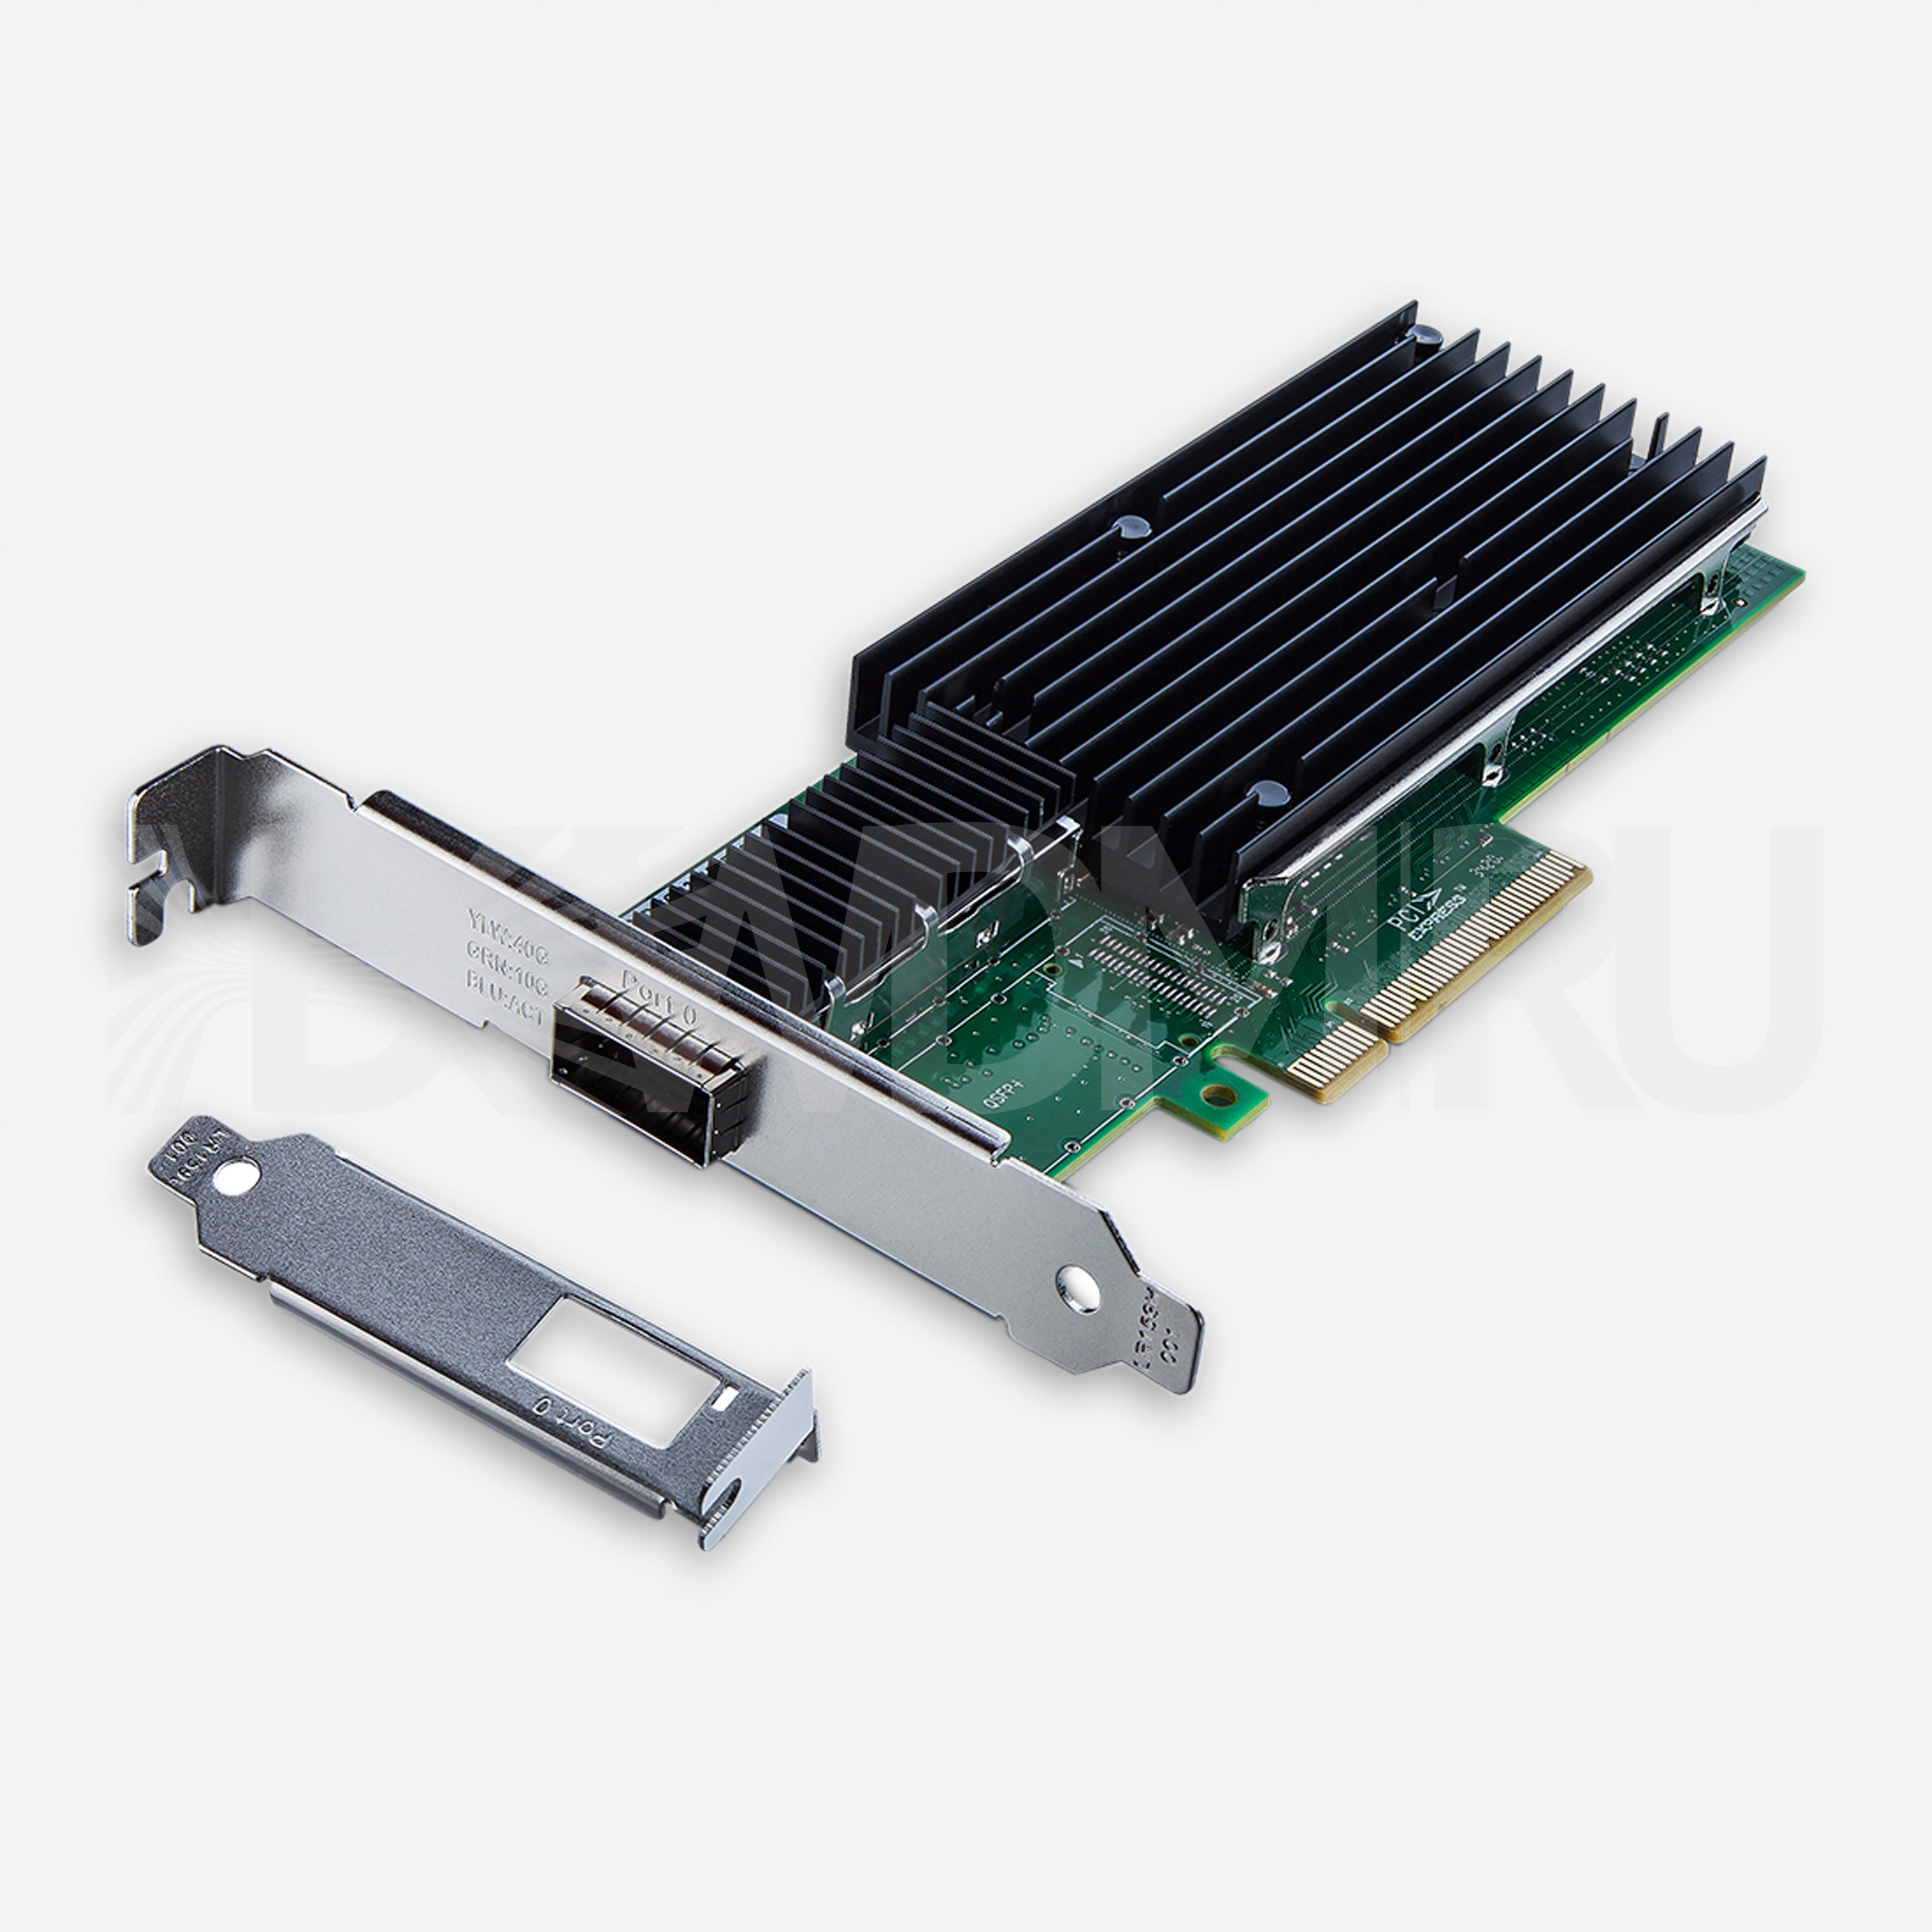 Сетевая карта 40 Gb/s (NIC), 1 порт QSFP, Intel XL710-AM1 Controller, PCIe 3.0 X8 - ДВДМ.РУ (DSO-N-40G1Q-XL710-X30-8)